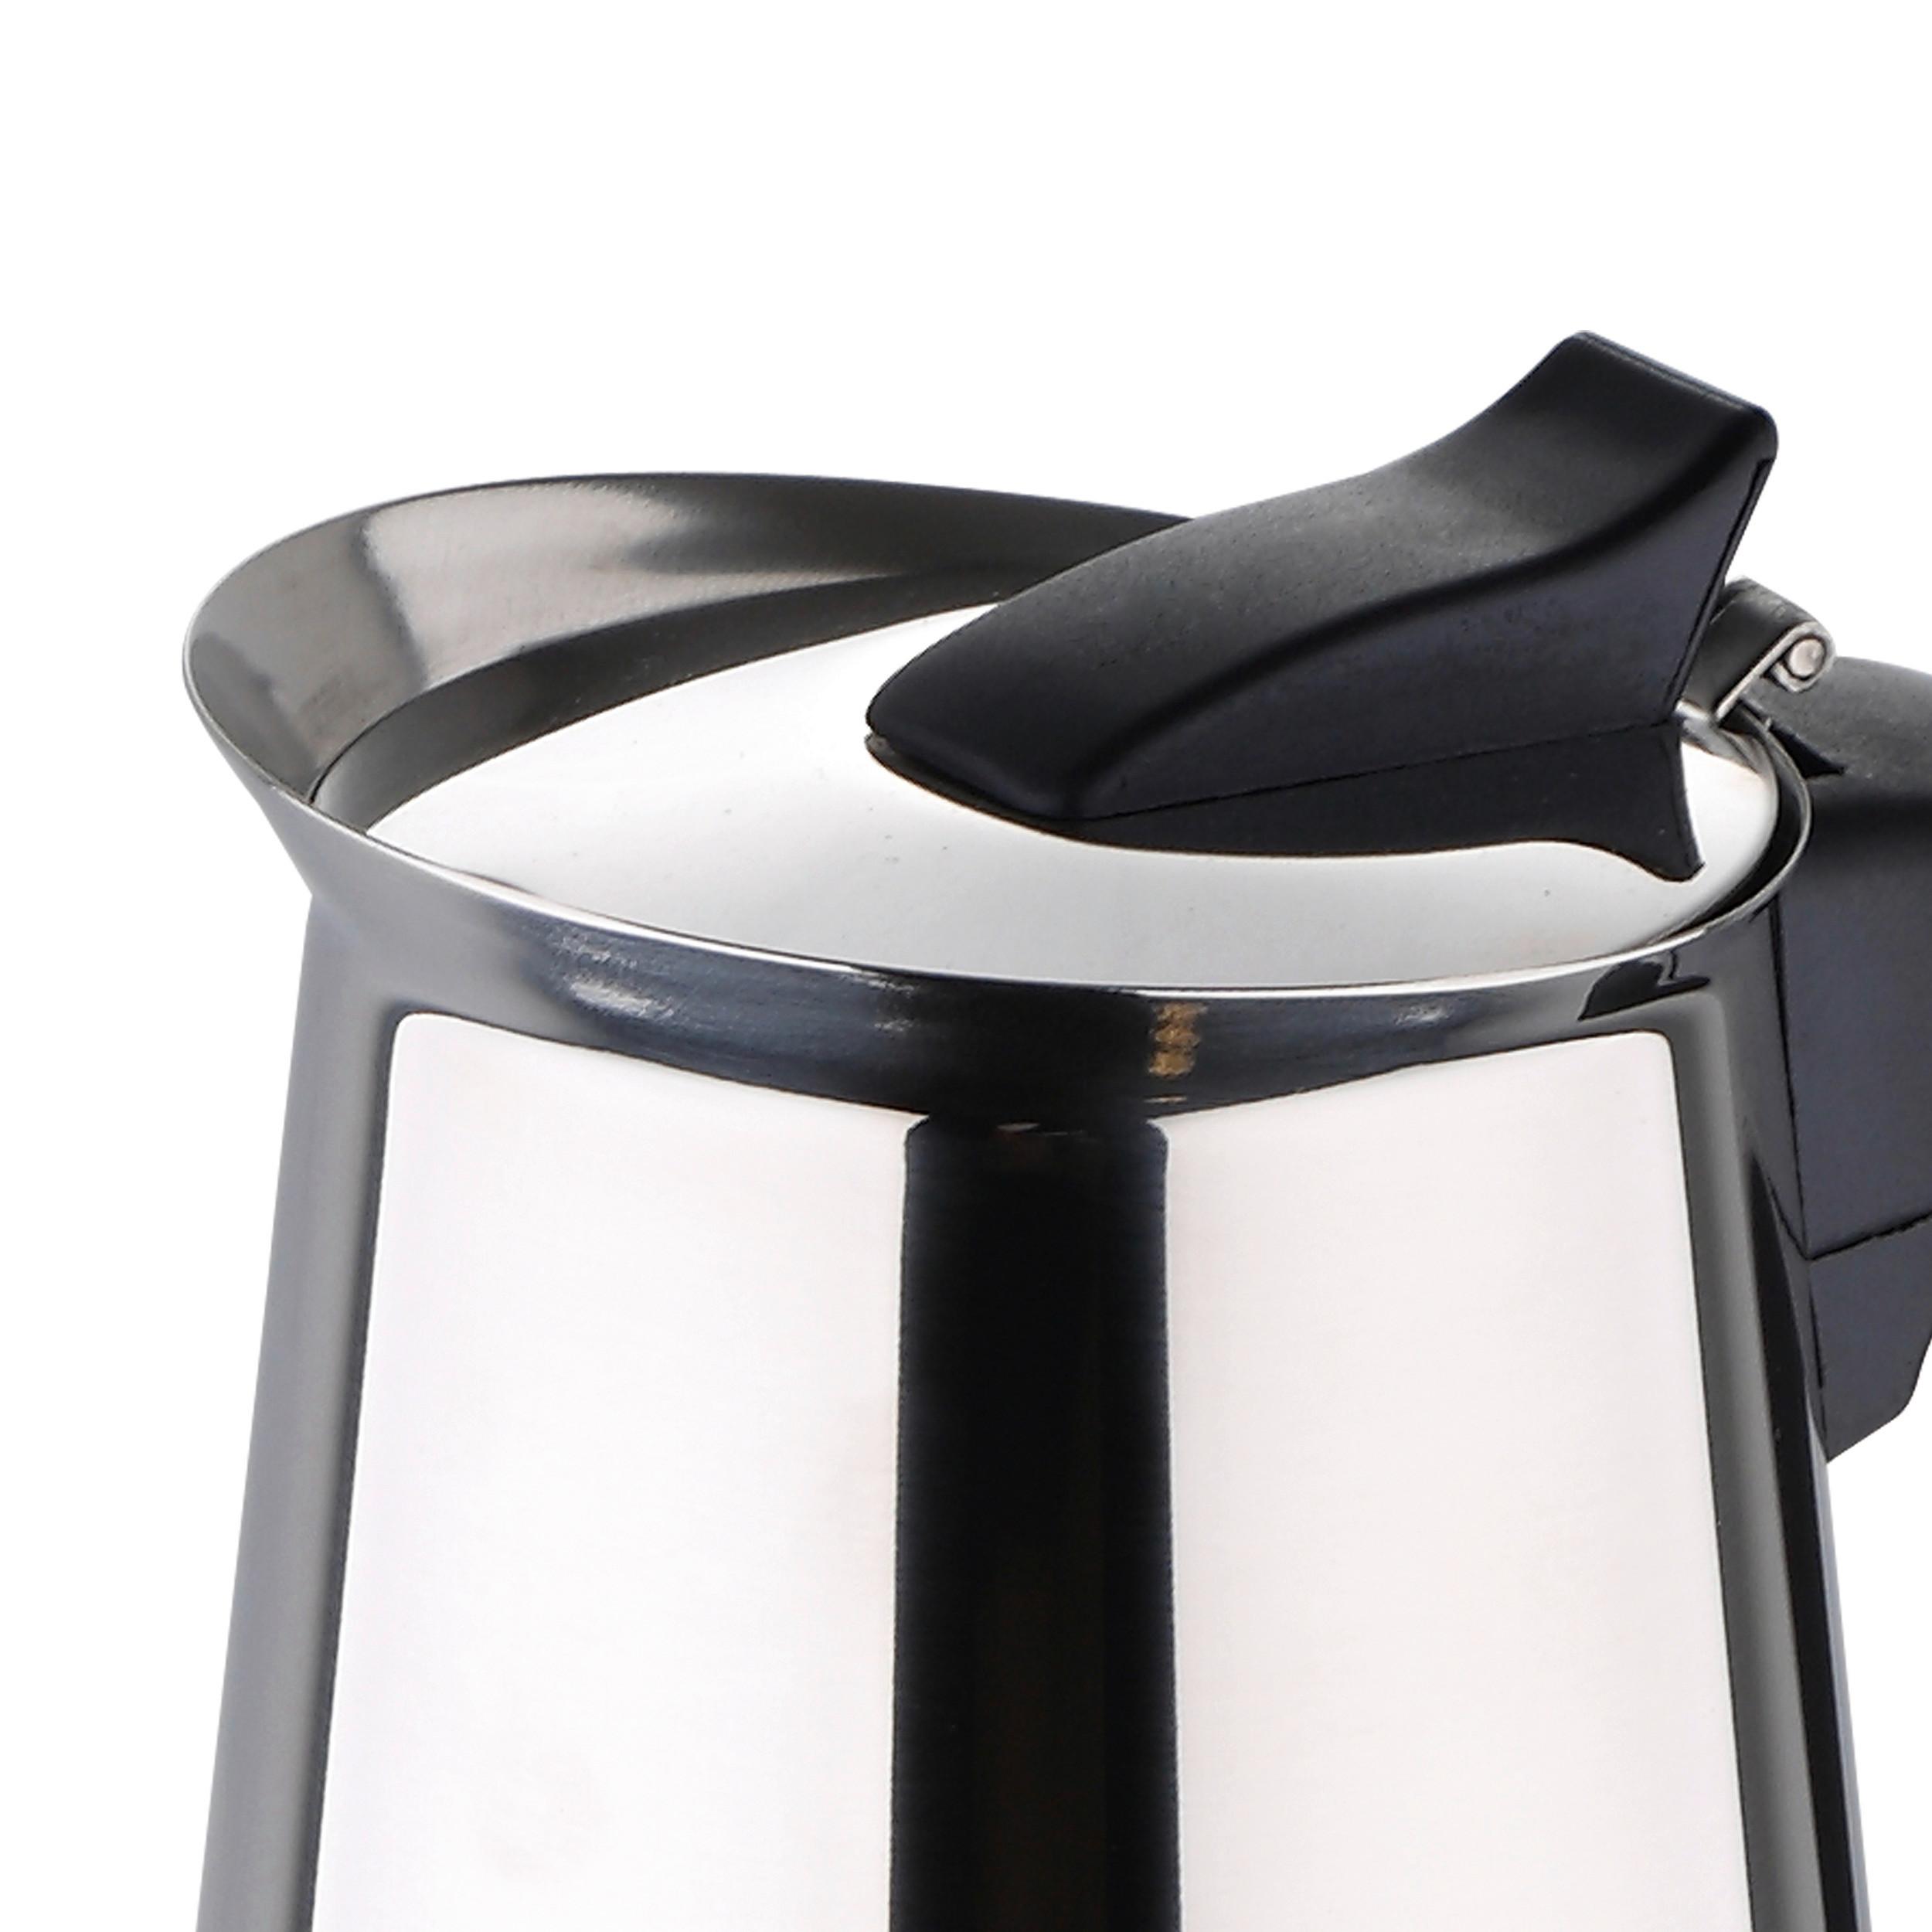 Espressokocher Barista in Silberfarben max. 300ml - Edelstahlfarben, MODERN, Kunststoff/Metall (11,3/19cm)